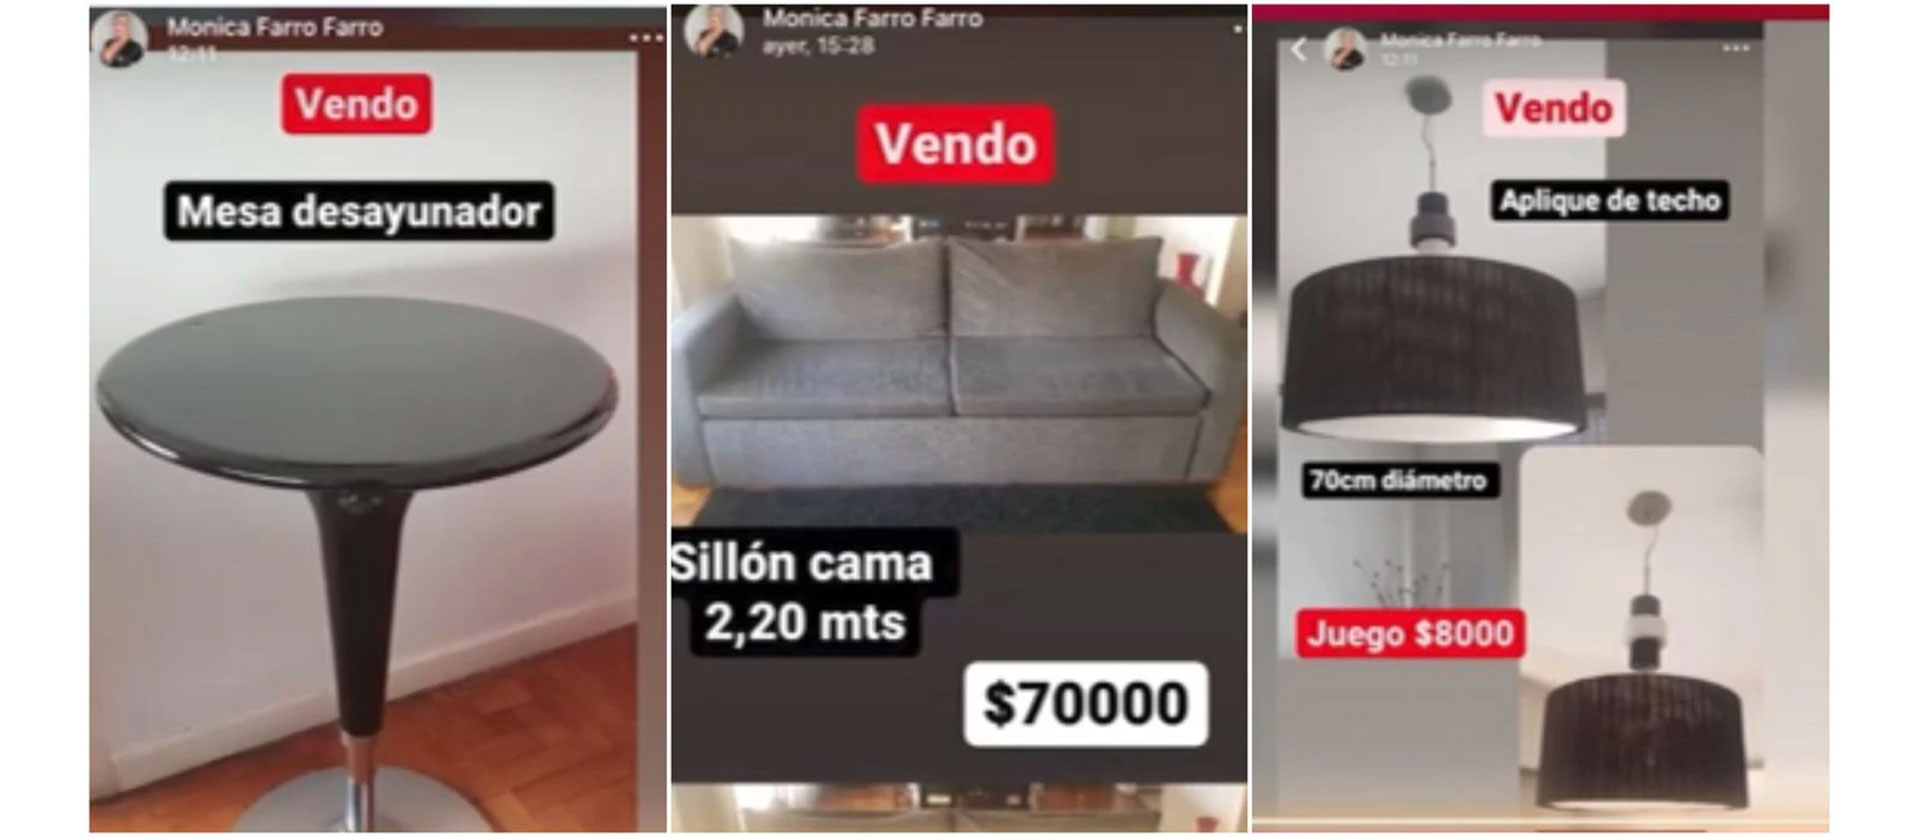 Mónica Farro vende sus muebles (Foto: captura América)